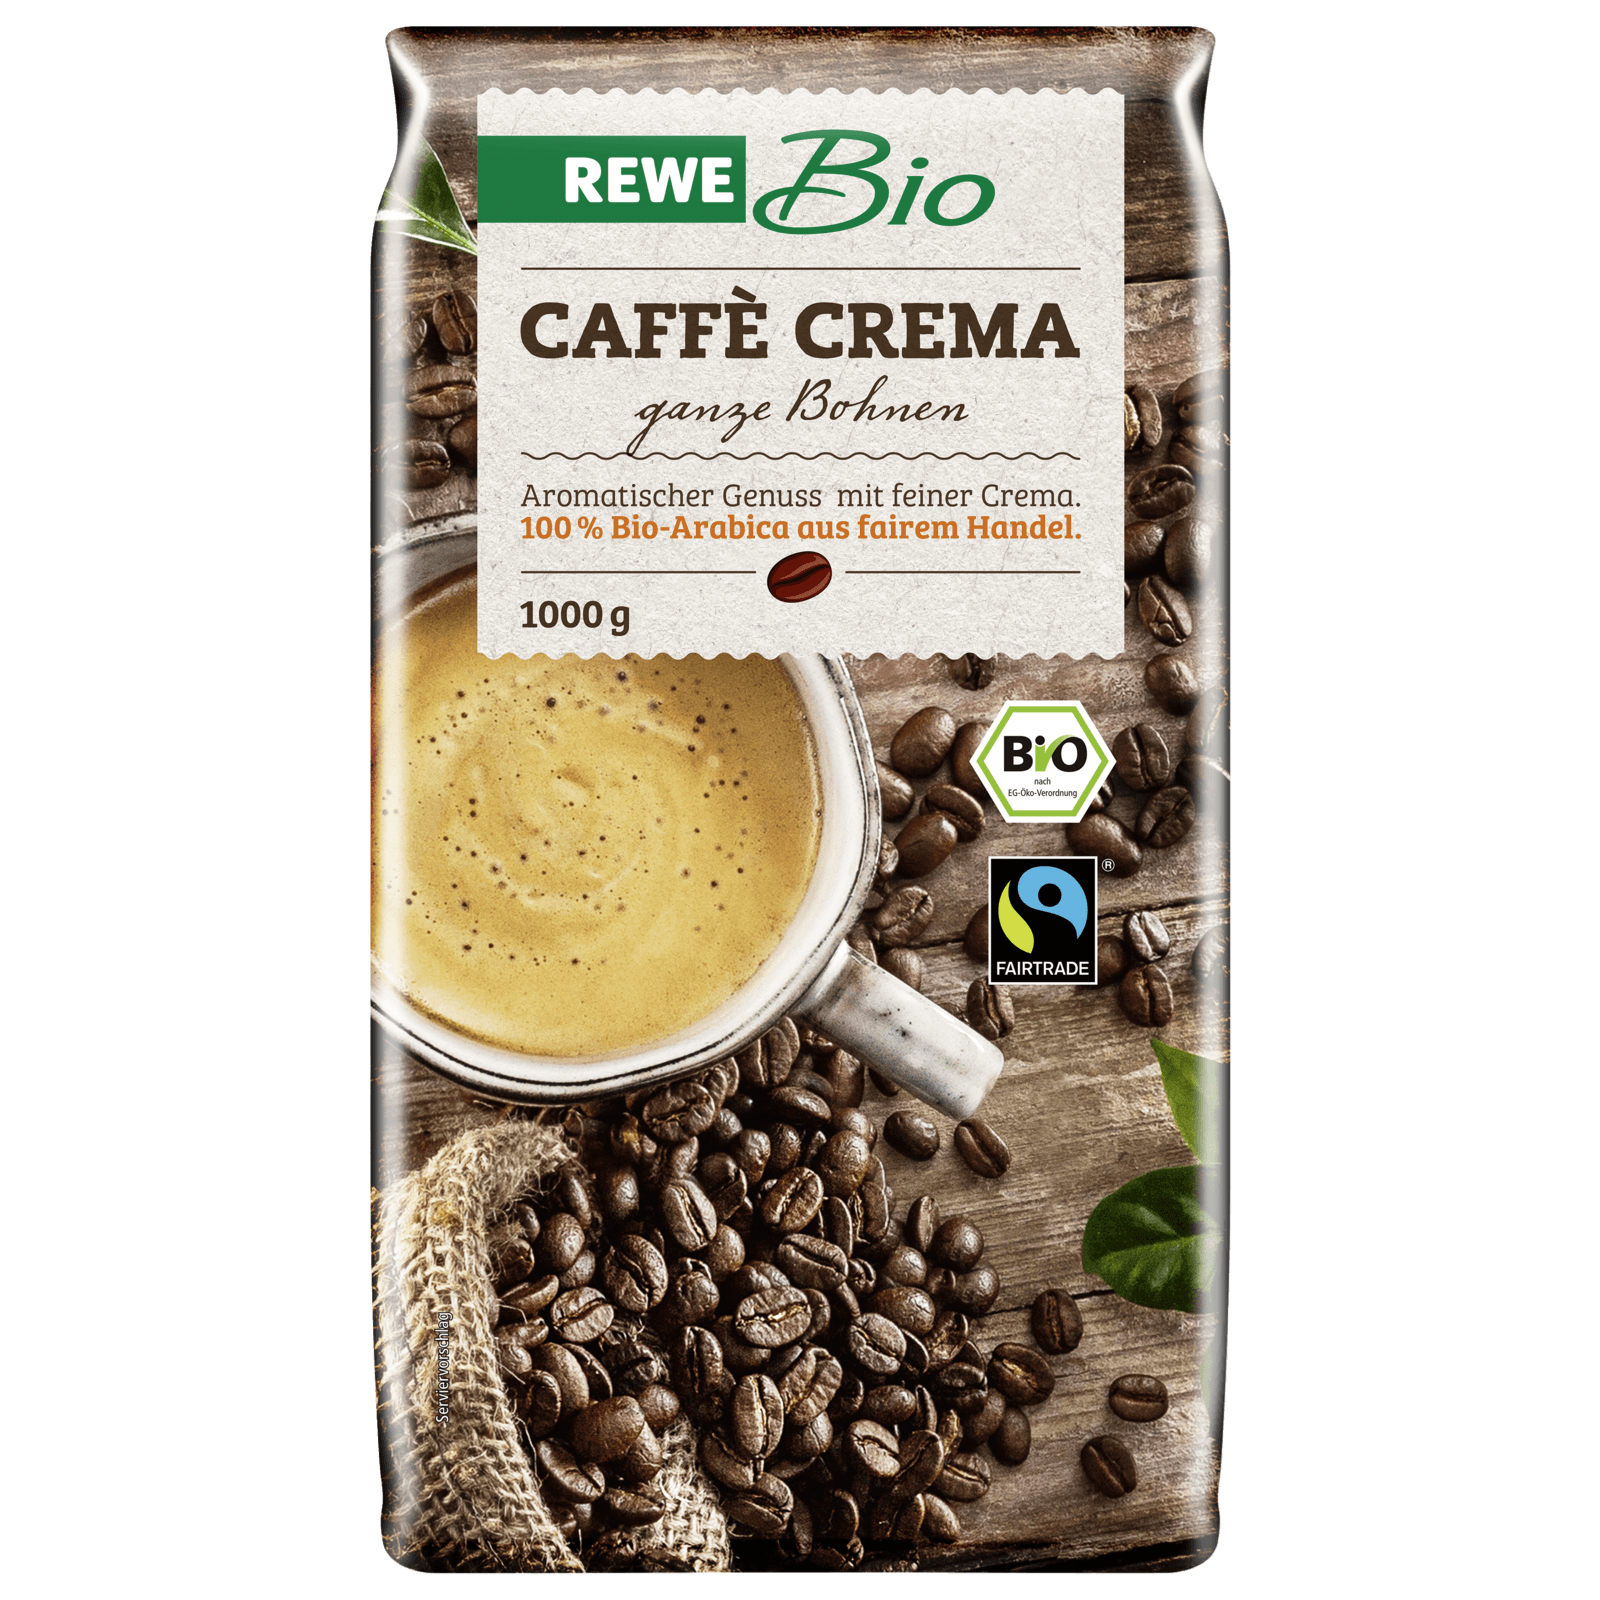 REWE Bio Caffè Crema ganze Bohne 1kg